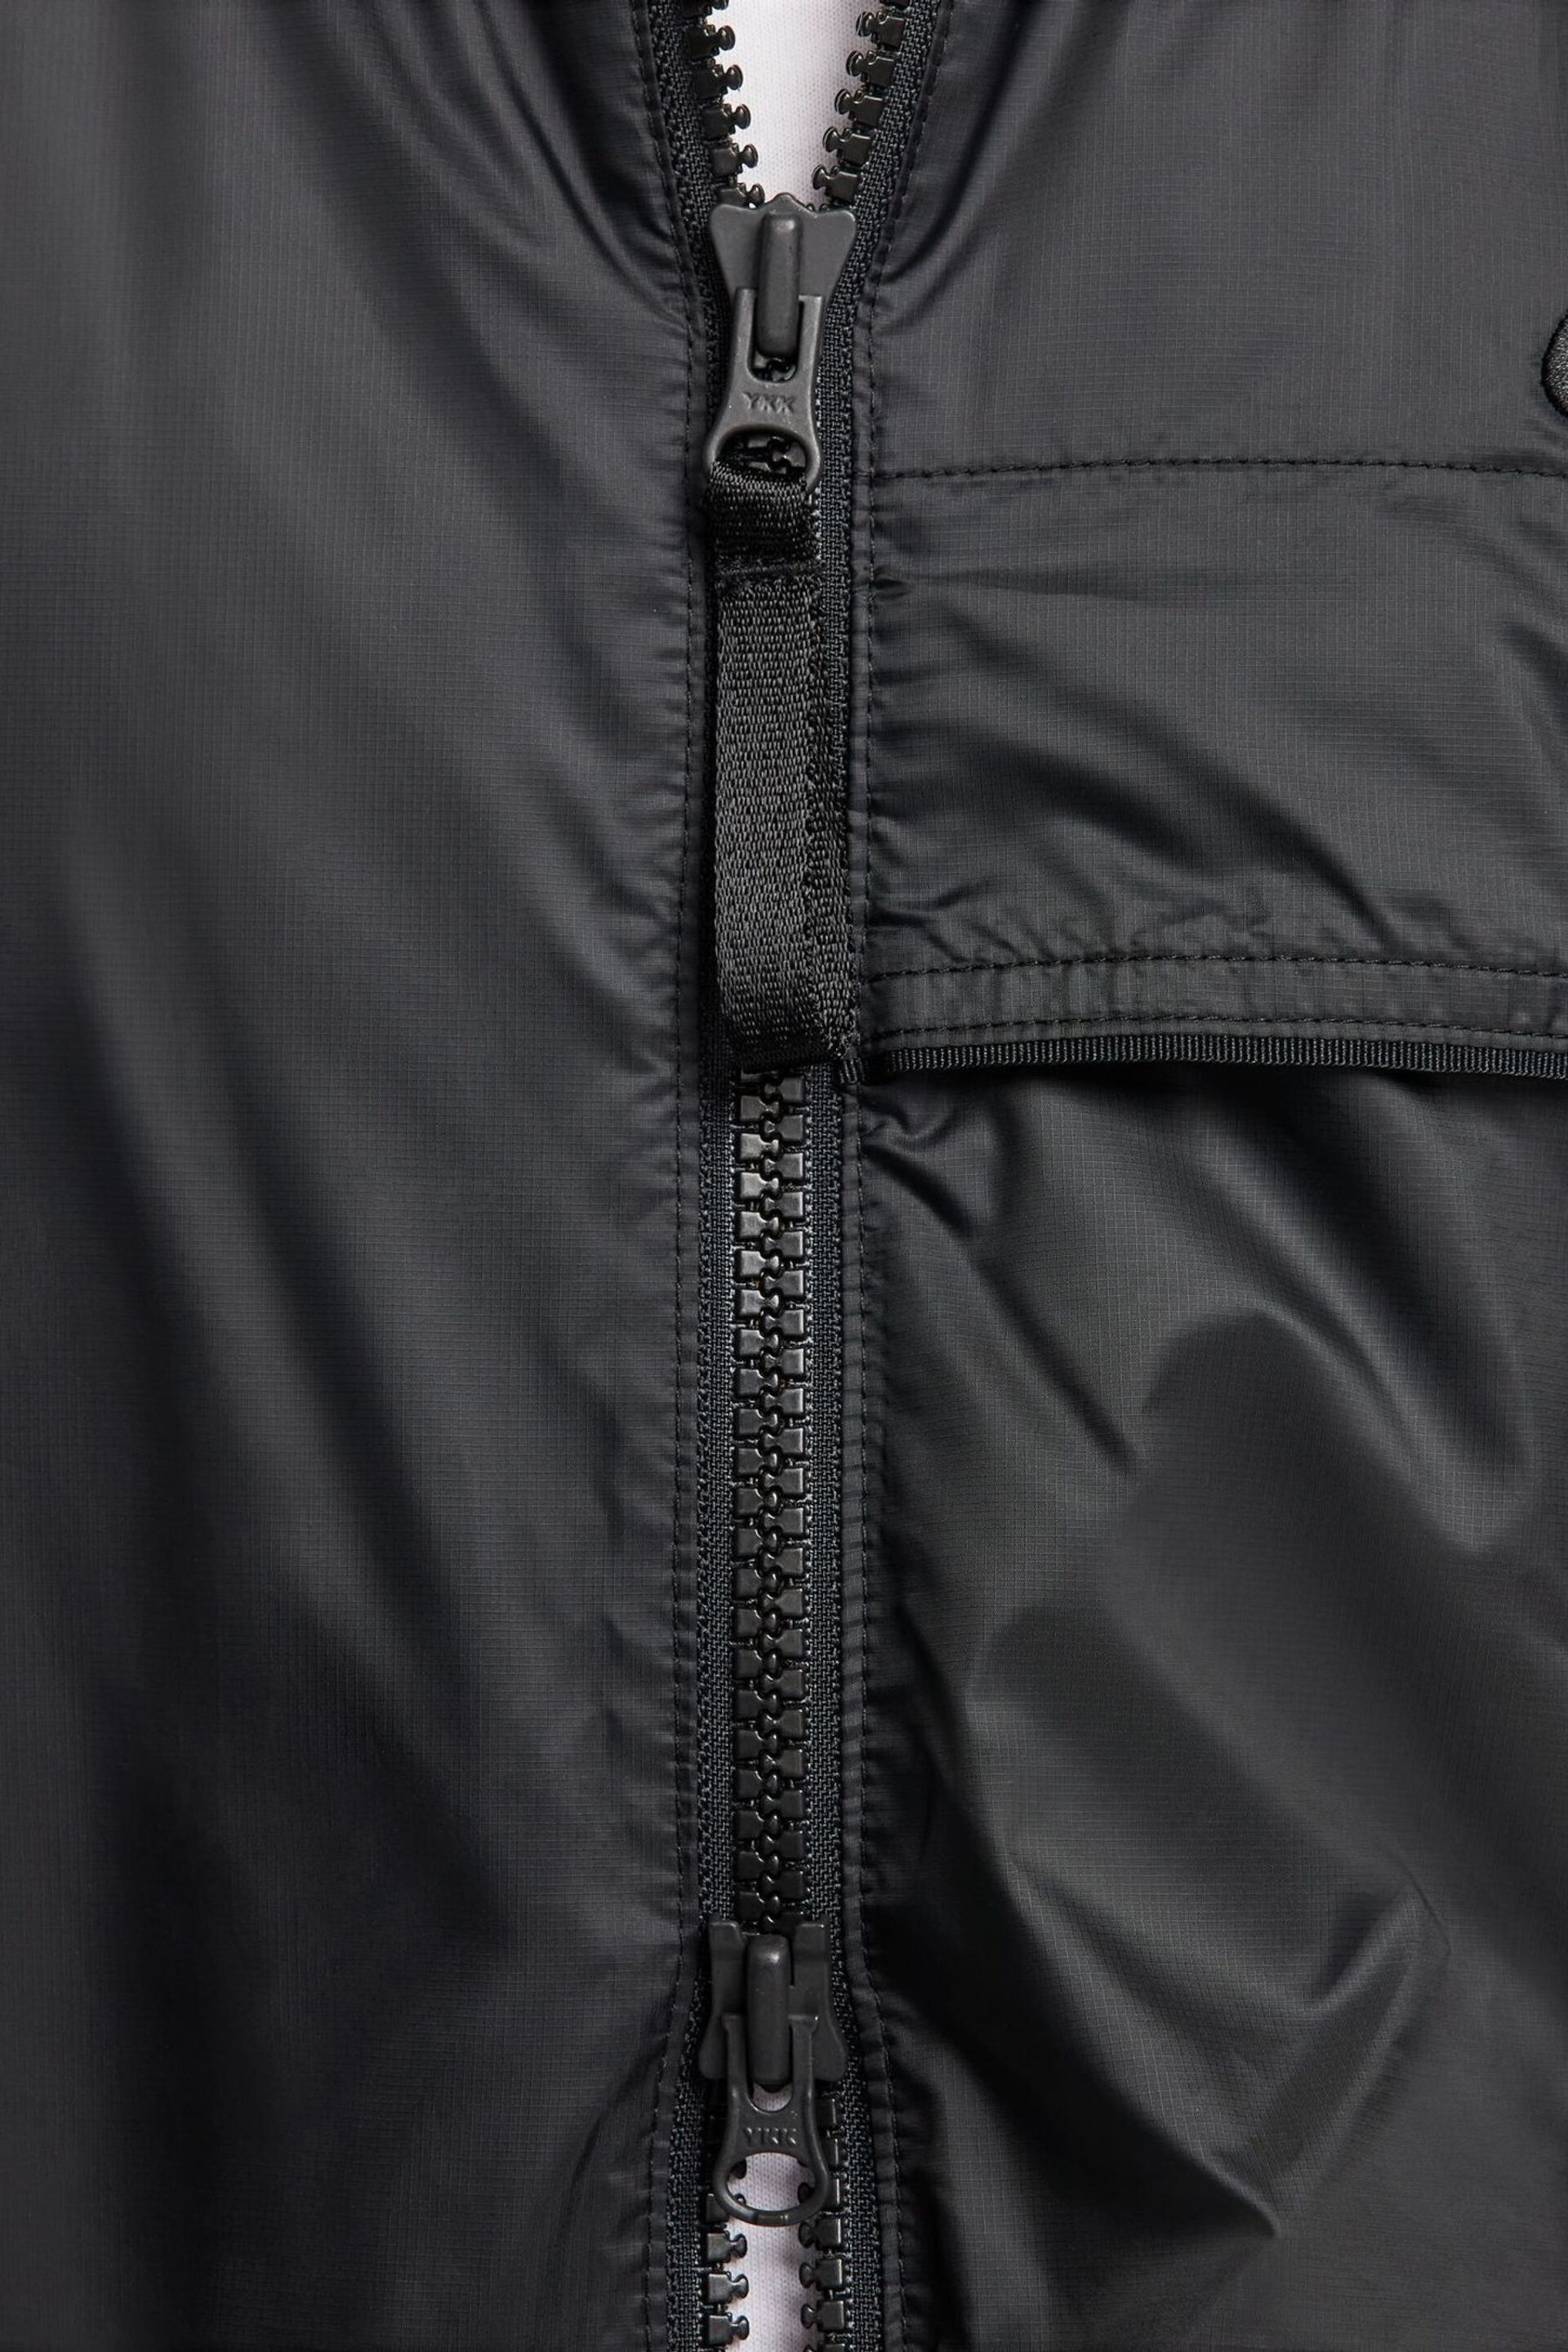 Nike Black Tech Woven Lined Lightweight Jacket - Image 11 of 13